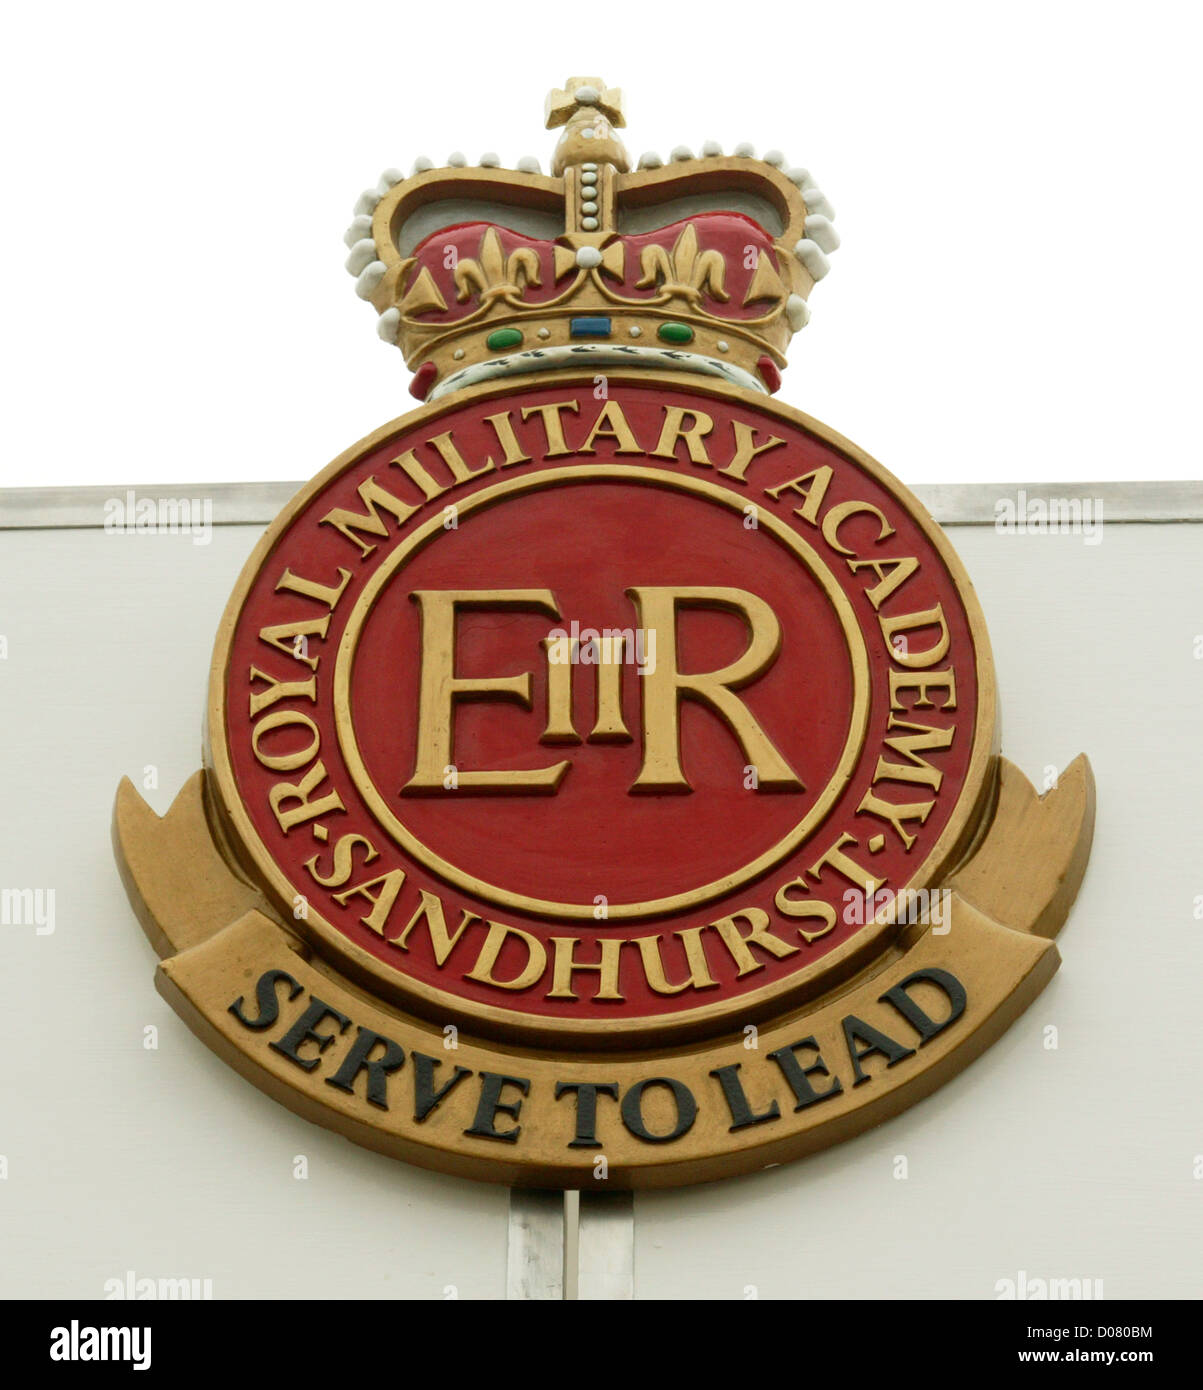 Badge and moto of the Royal military Academy Sandhurst UK Stock Photo